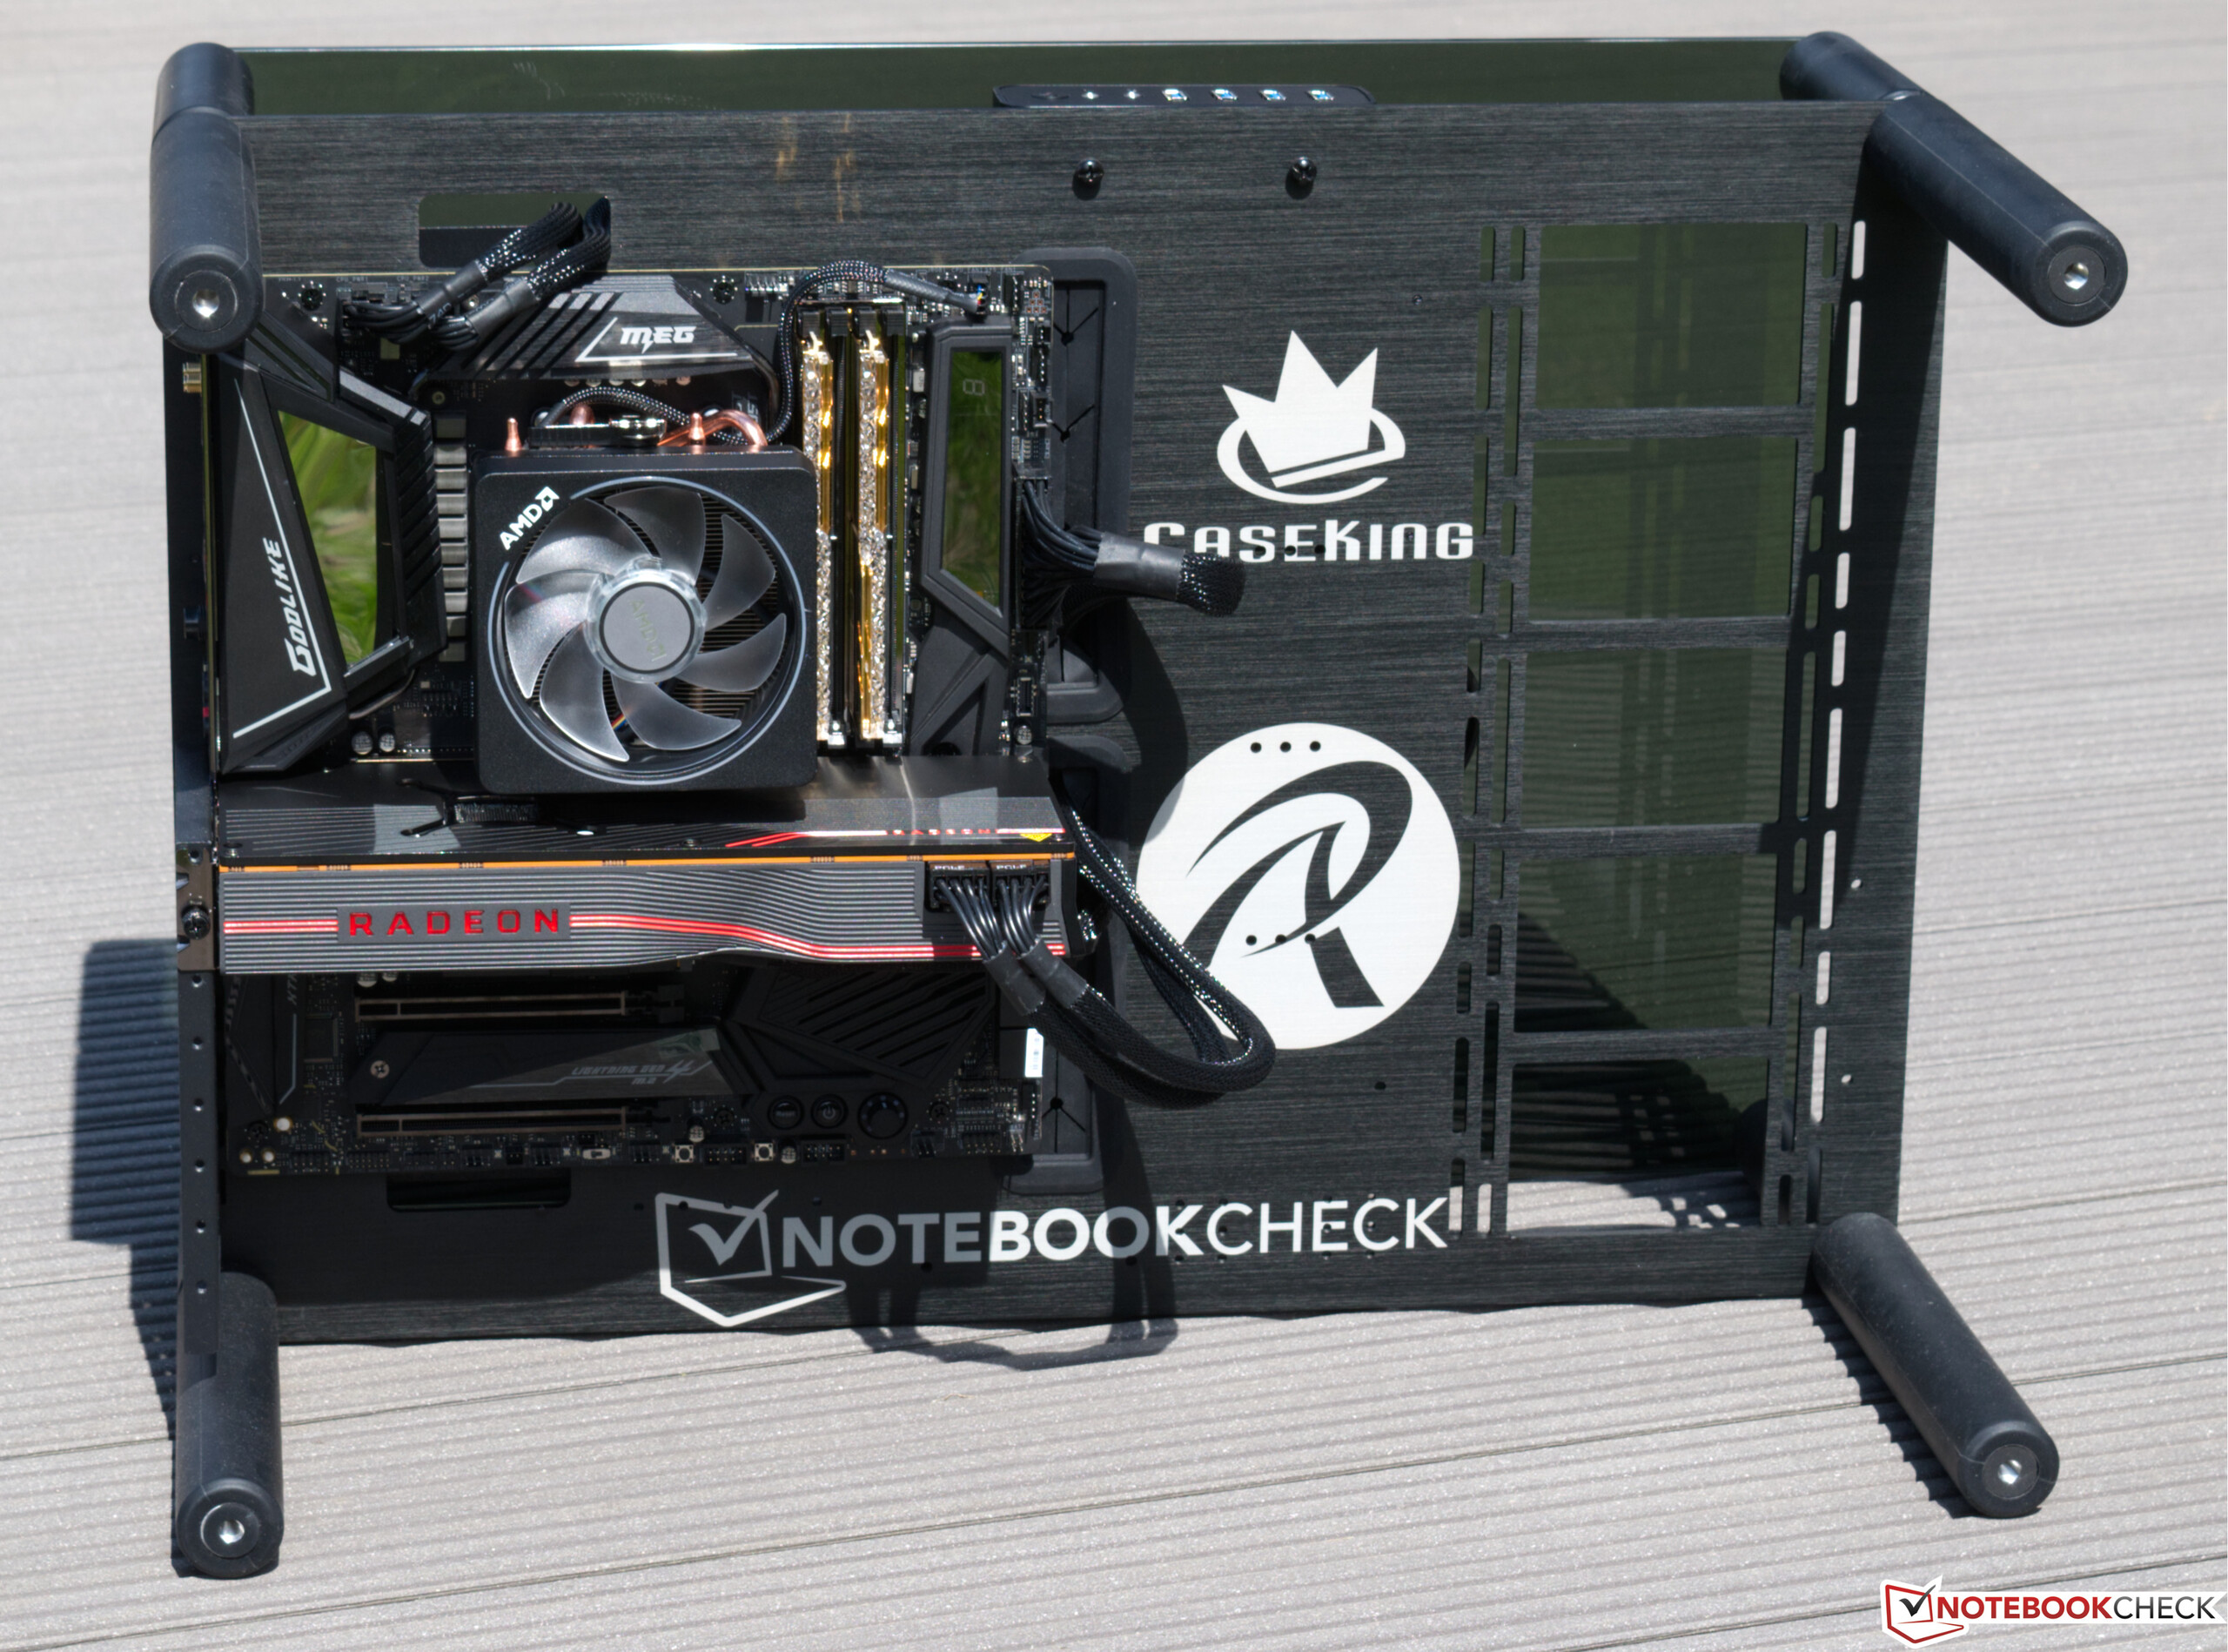 AMD Ryzen 7 3700X评测：一颗朴素的8核16线程处理器- Notebookcheck